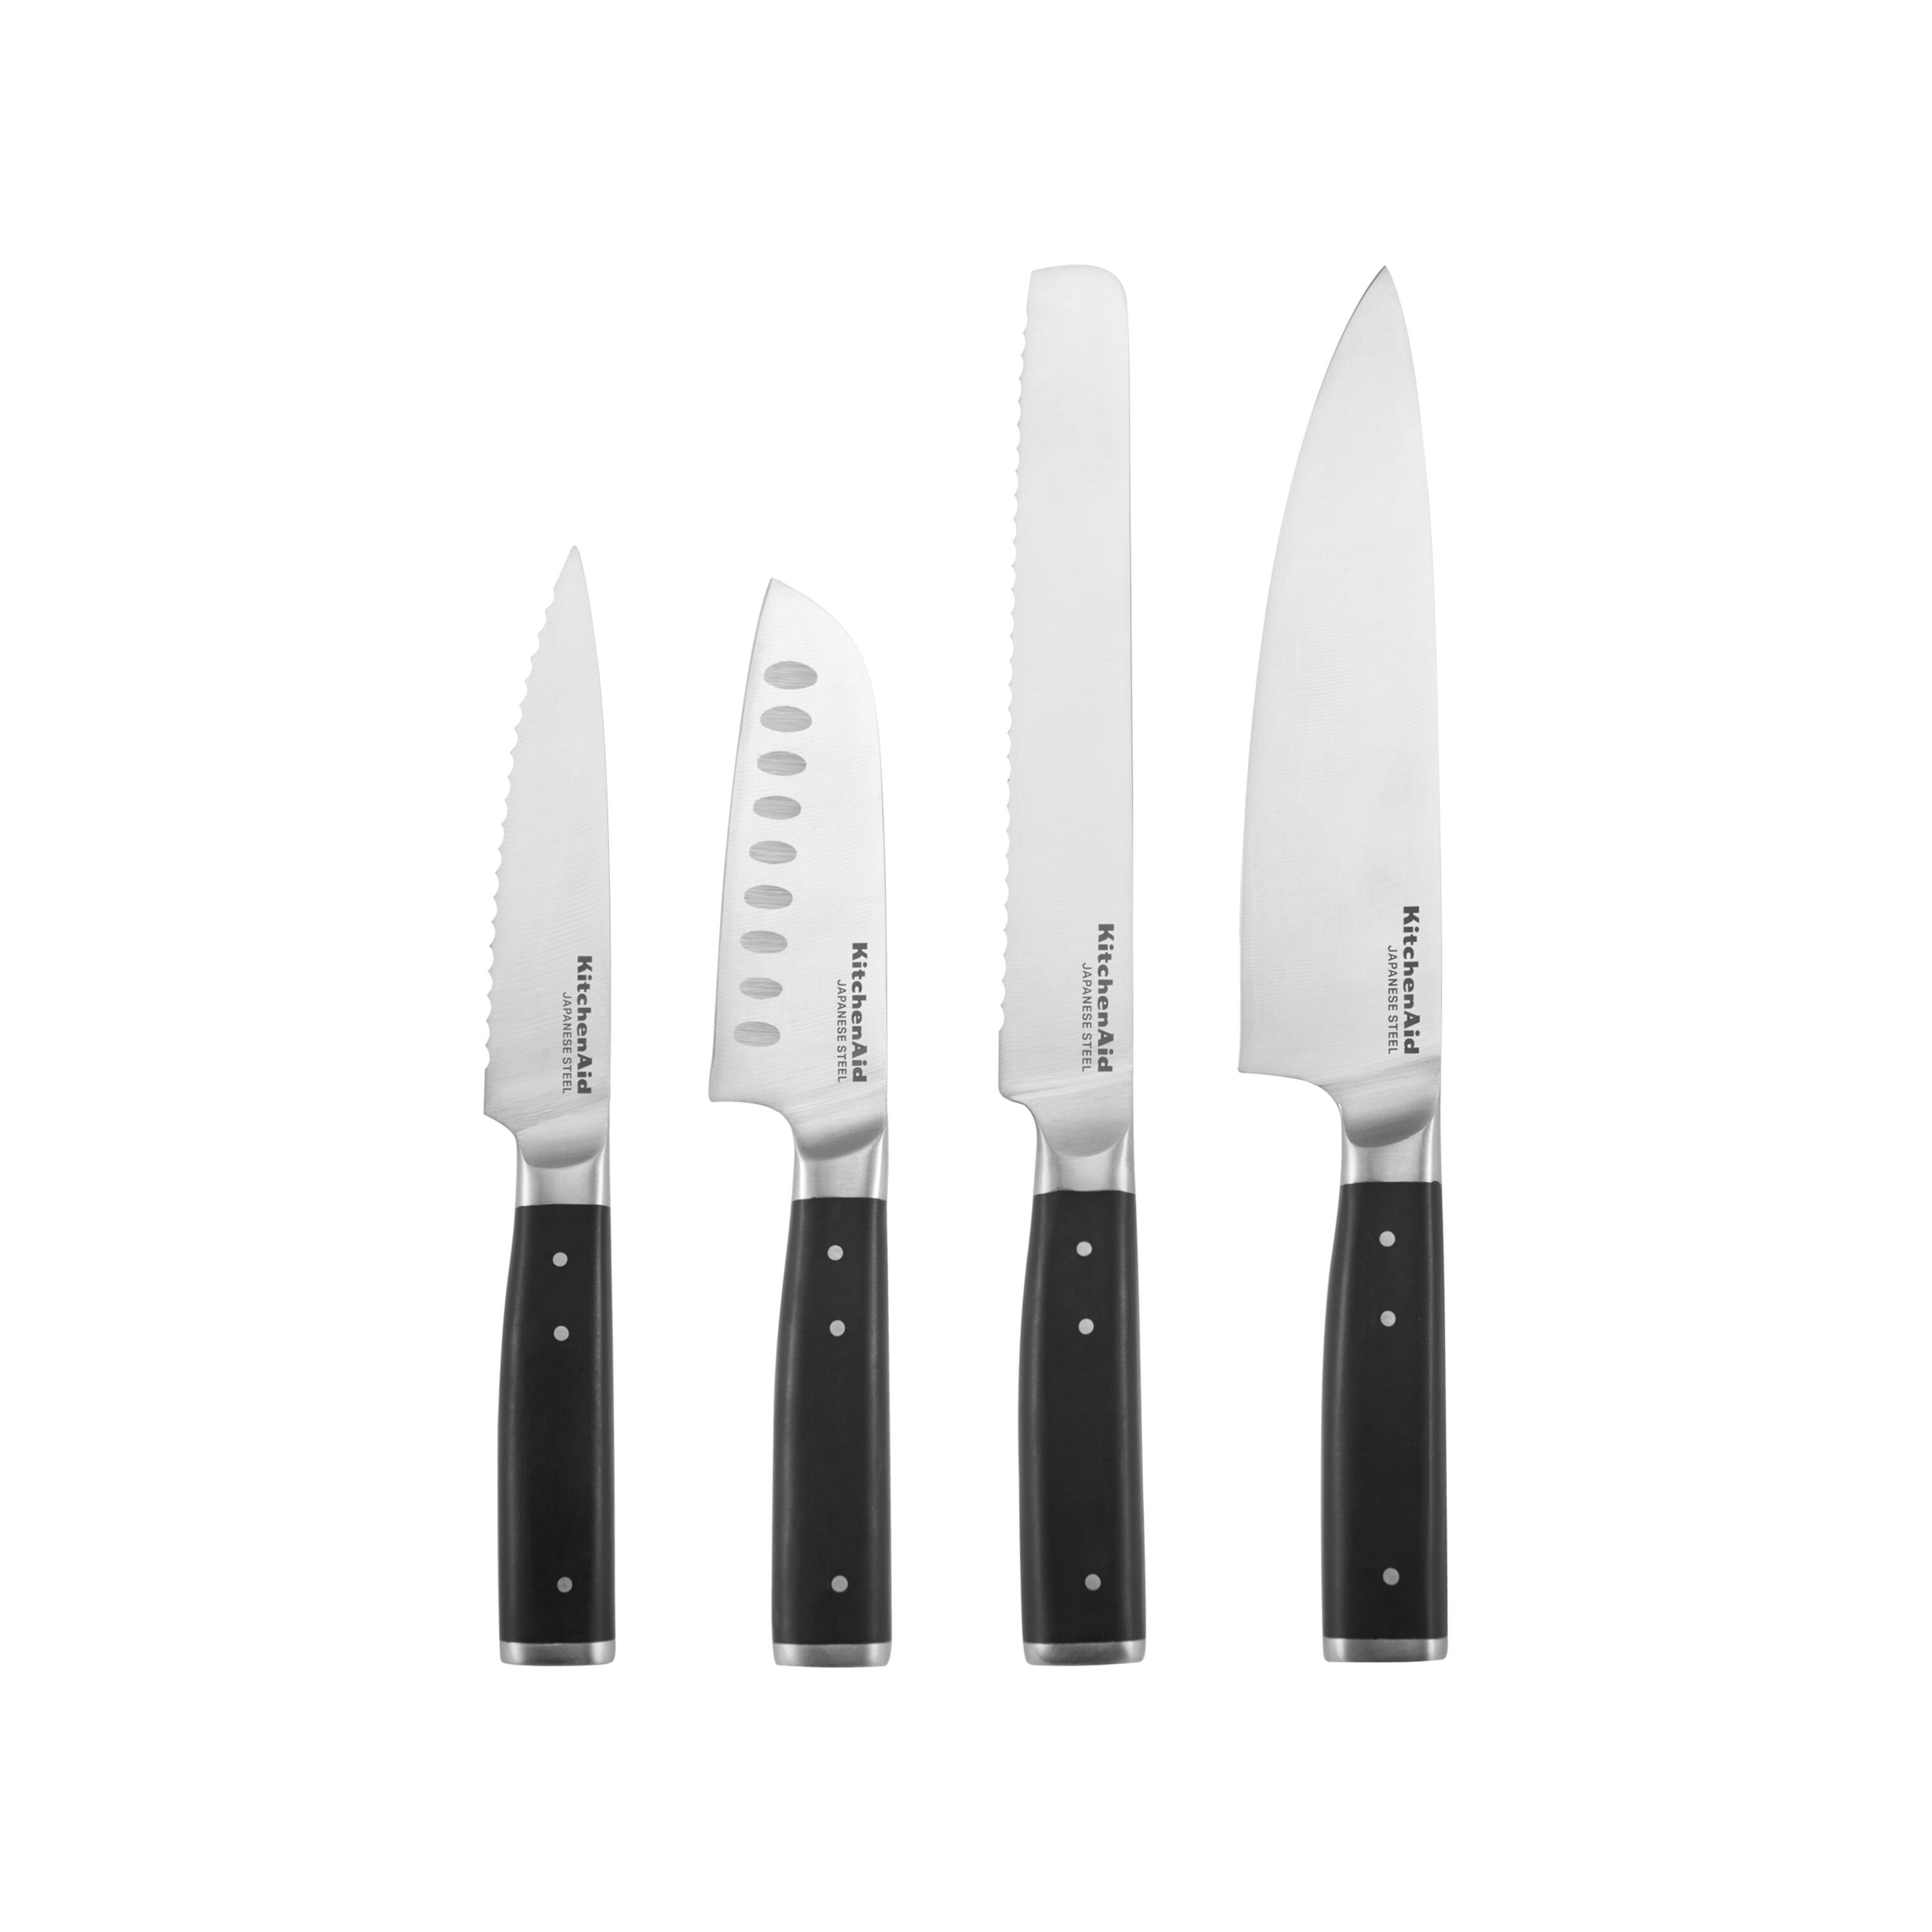 Kitchenaid Kitchen Aid 14 Piece Block Knife Set Reviews 2024